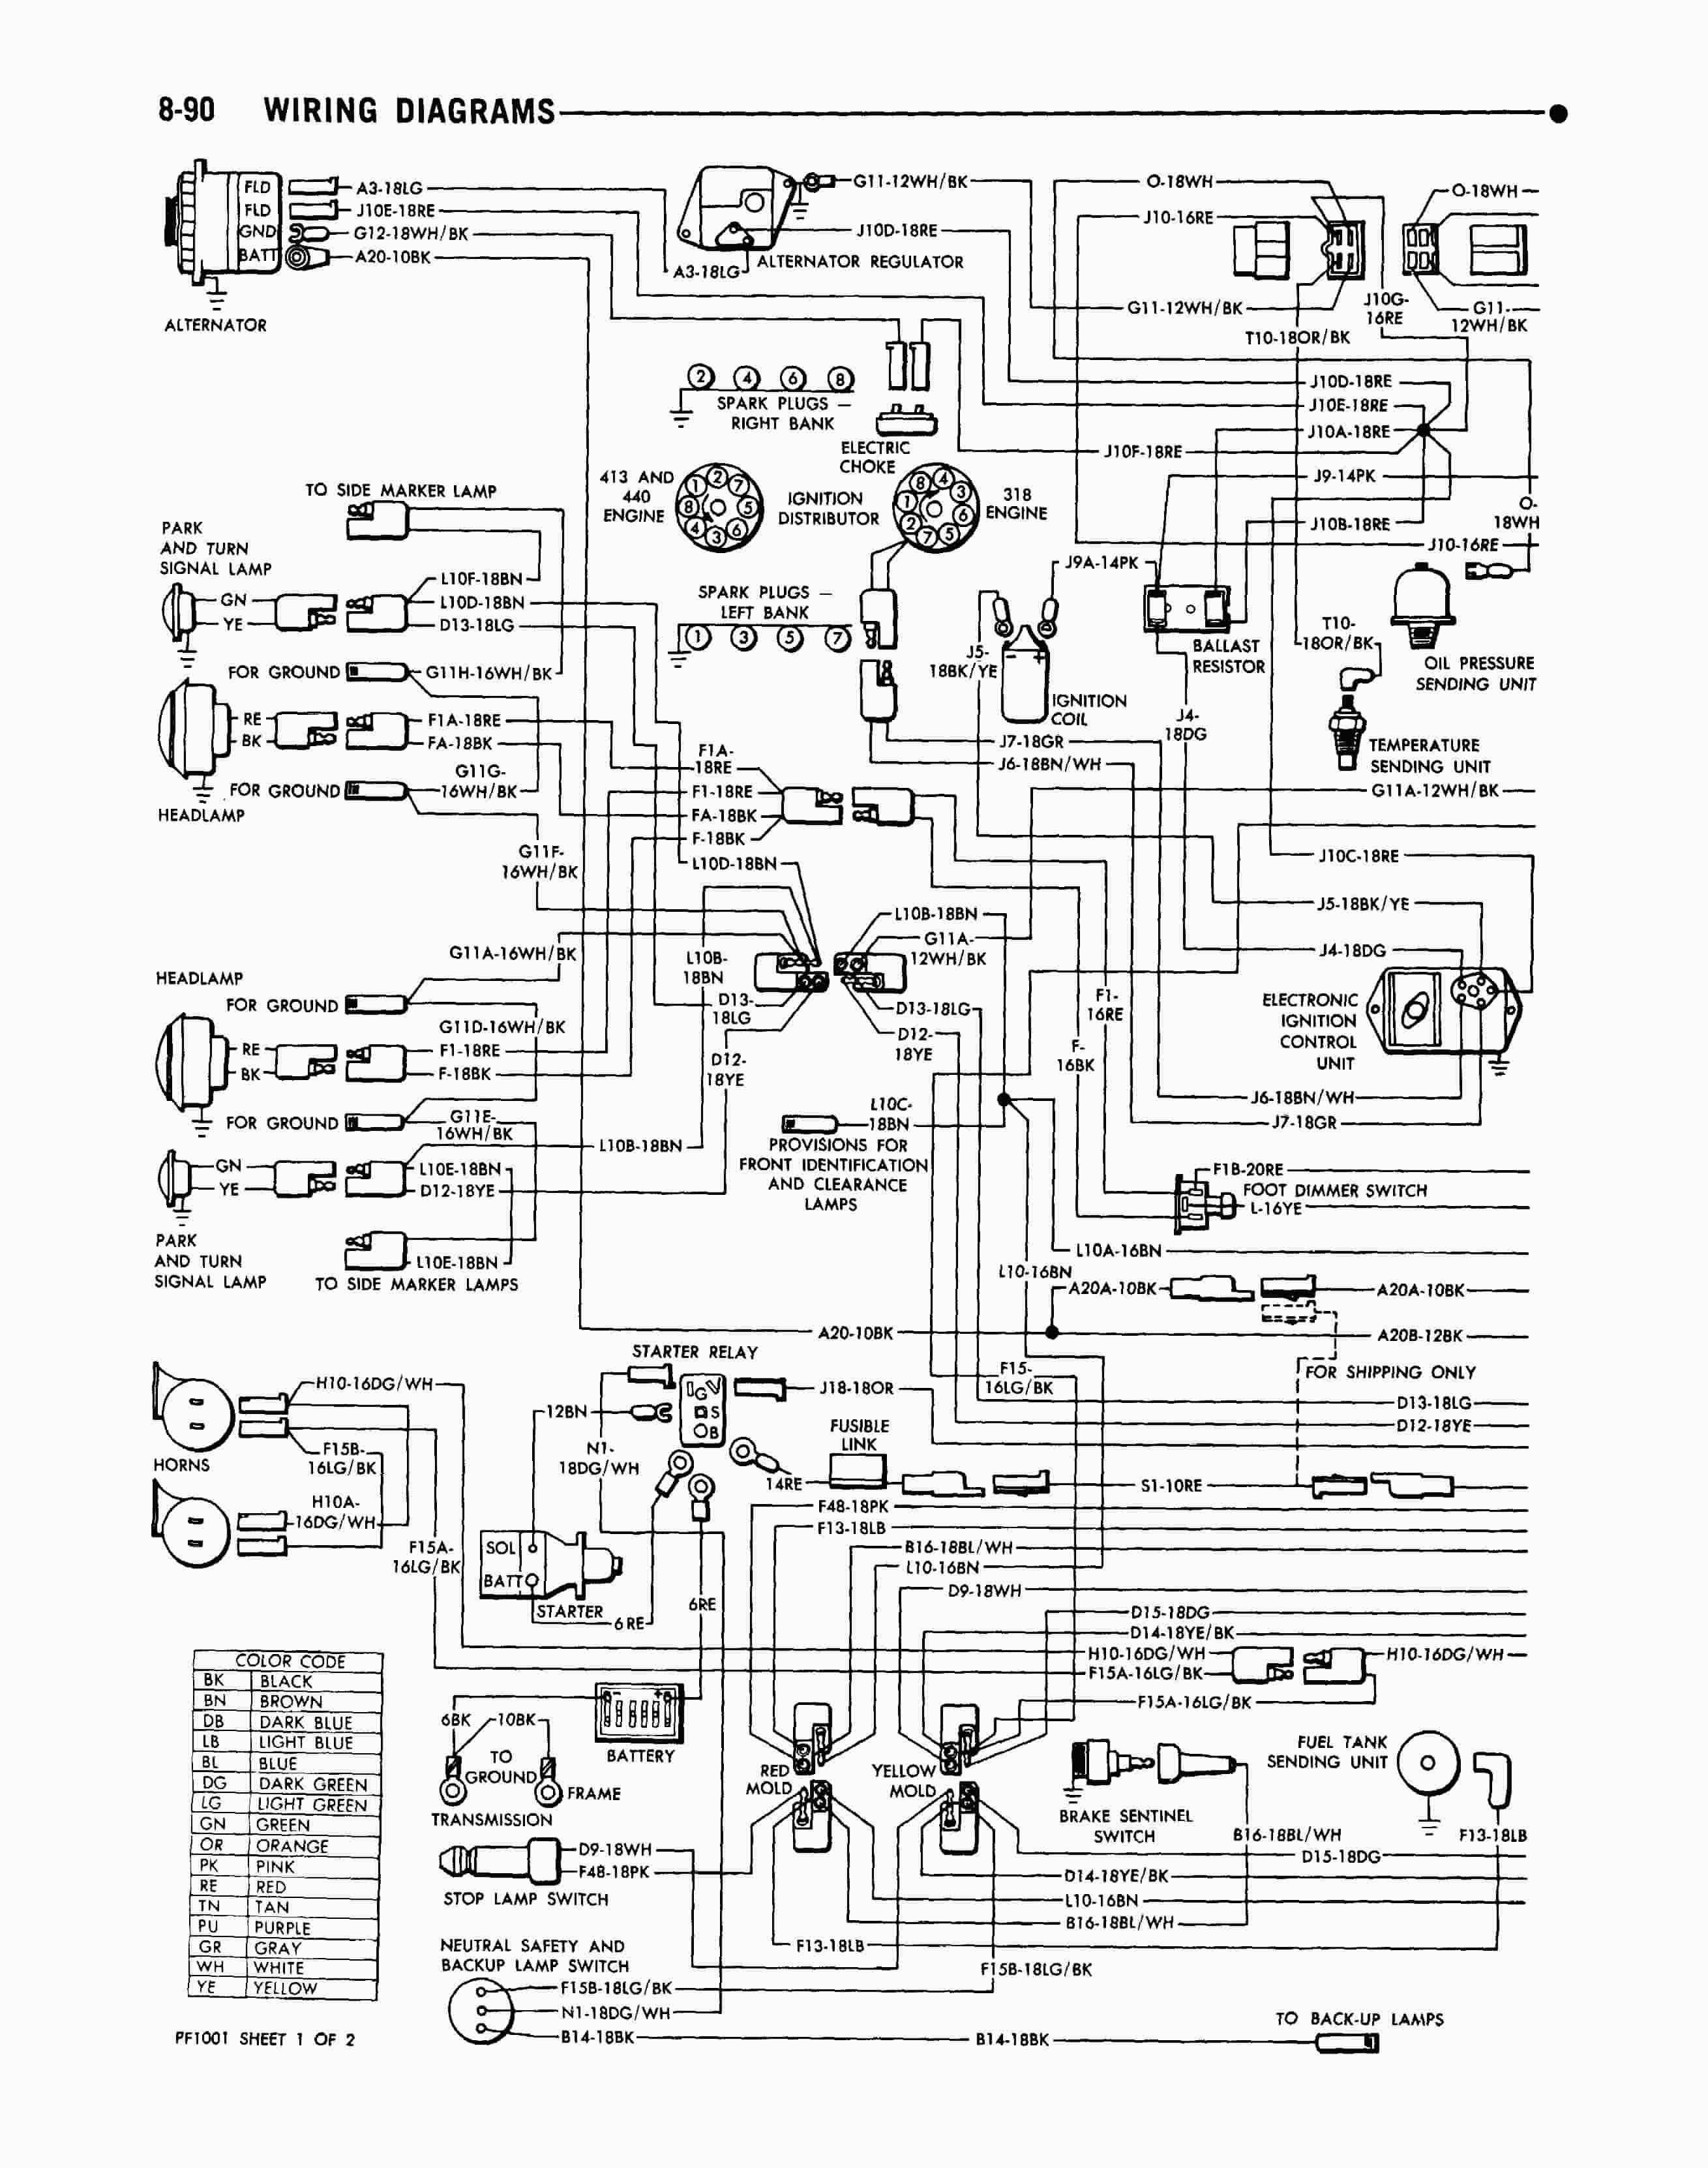 440 Dodge Engine Diagram - Wiring Diagram Networks